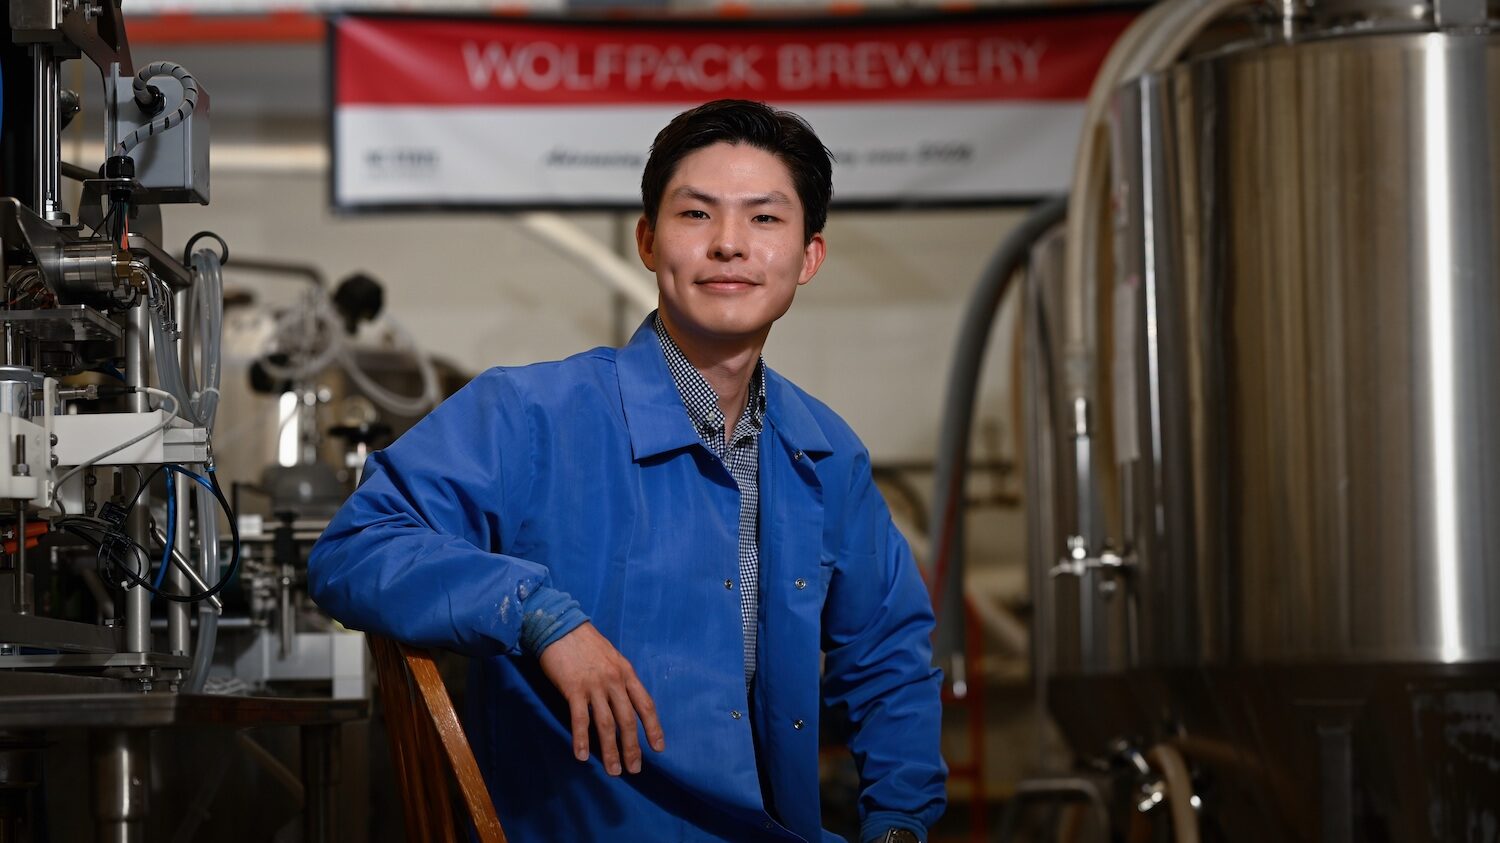 Ray Baek at the Wolfpack Brewery